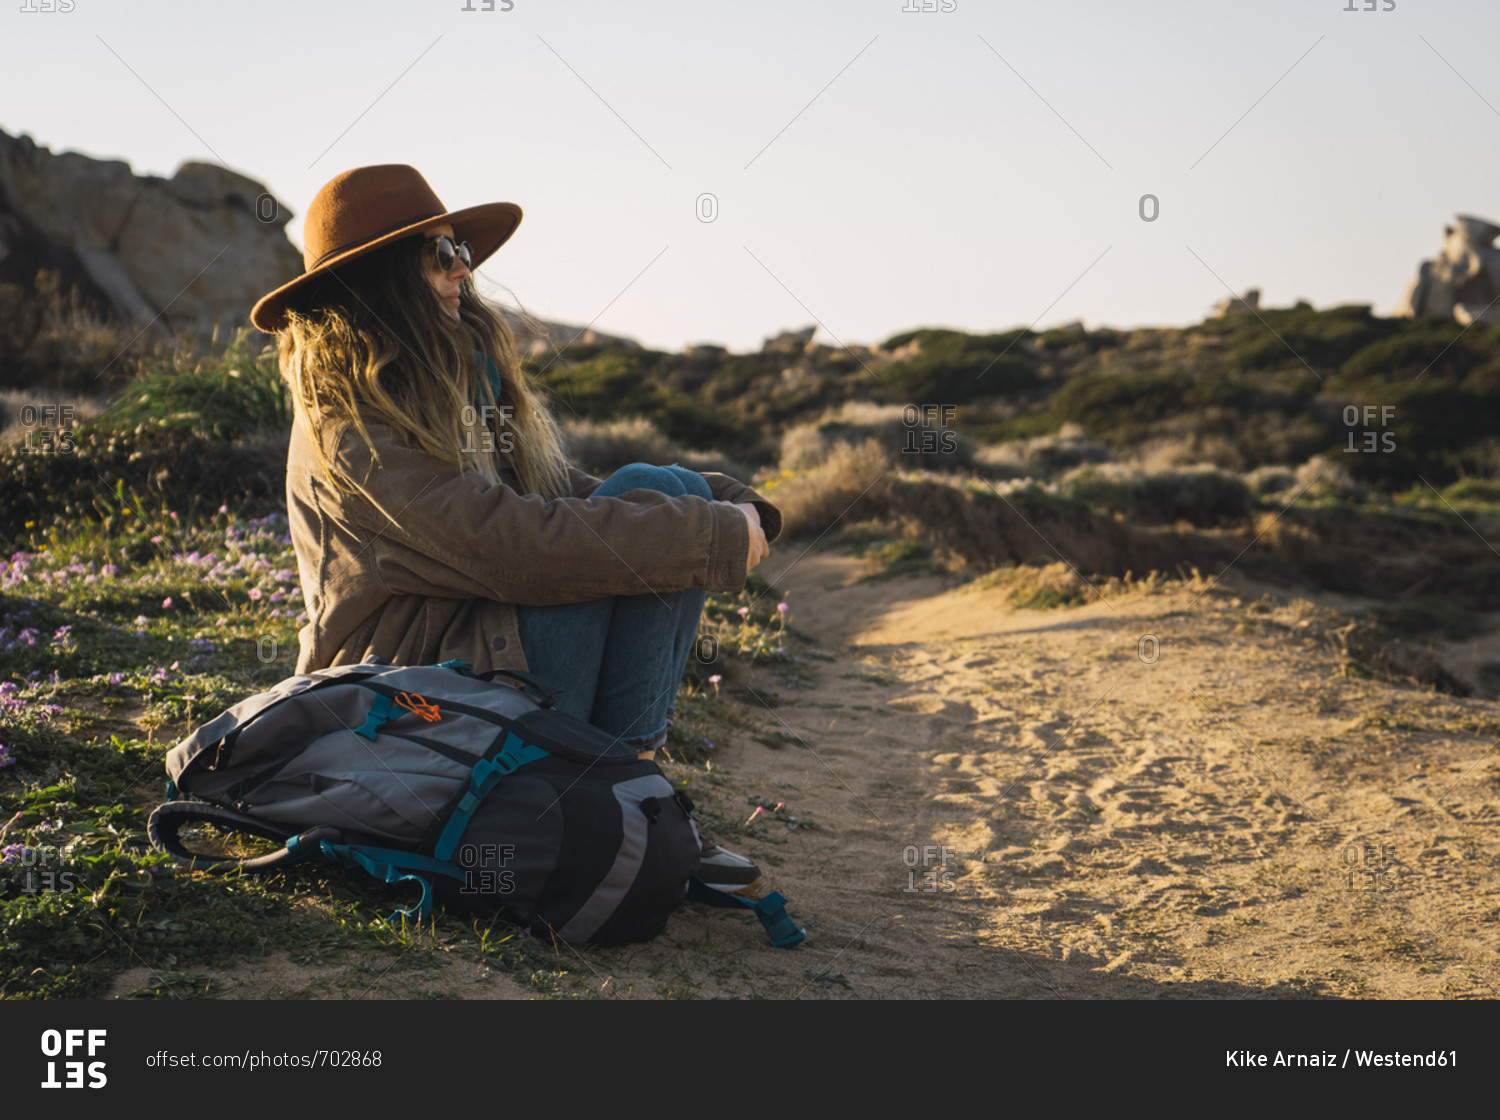 Italy- Sardinia- woman on a hiking trip having a break